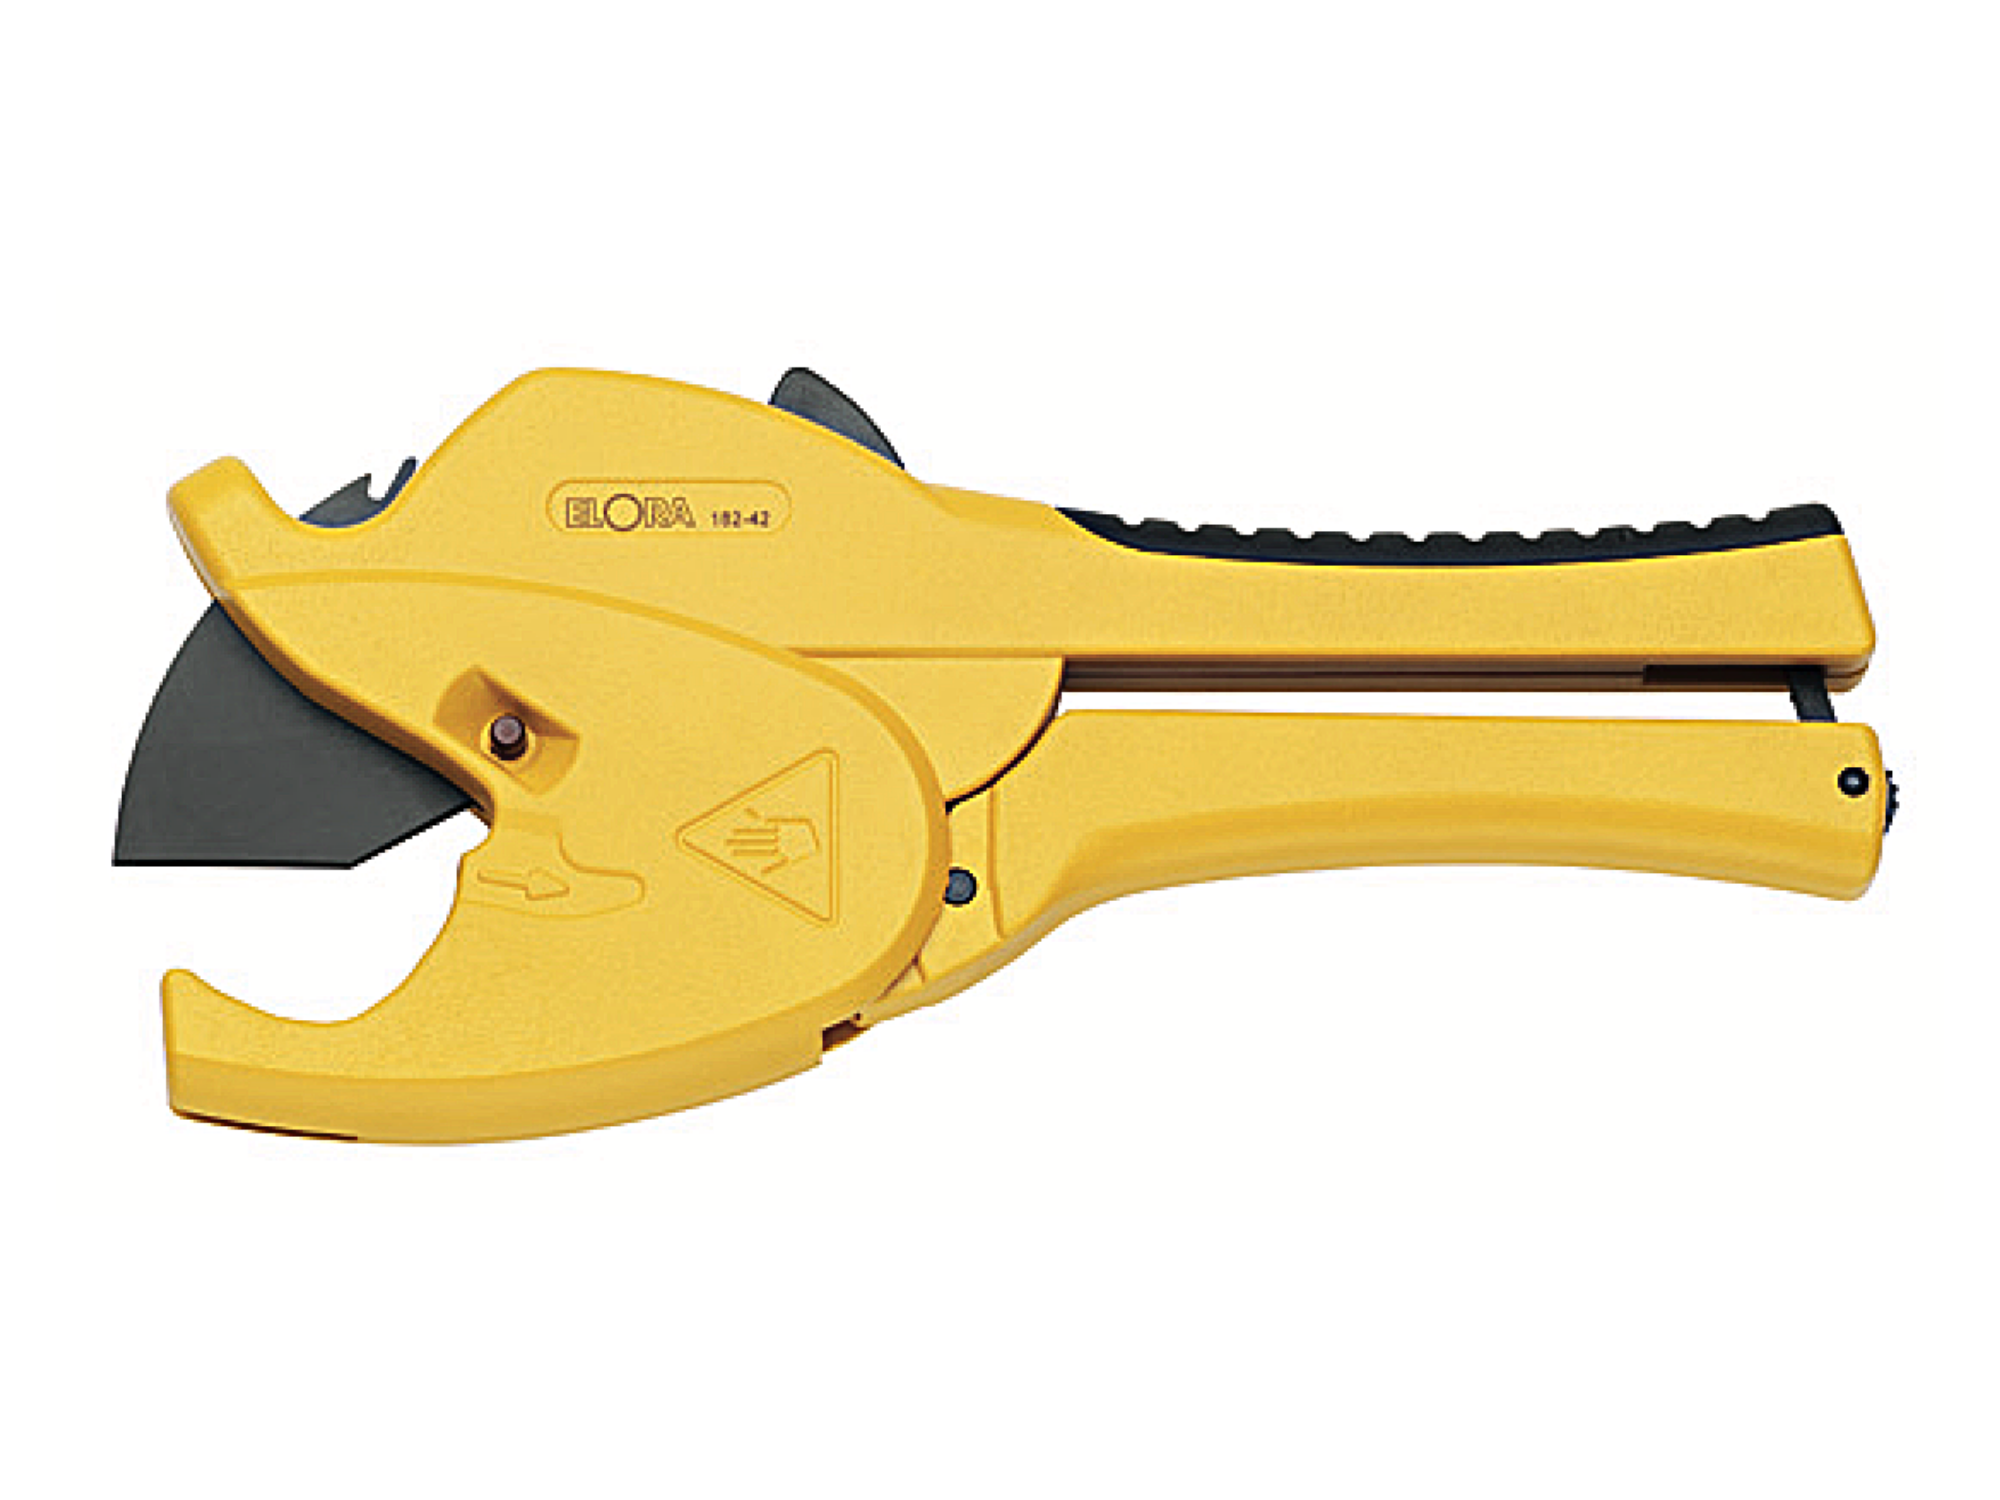 ELORA 182-E 42 Plastic Pipe Cutter/Scissors Spare Blade (ELORA Tools) - Premium Pipe Cutter from ELORA - Shop now at Yew Aik.